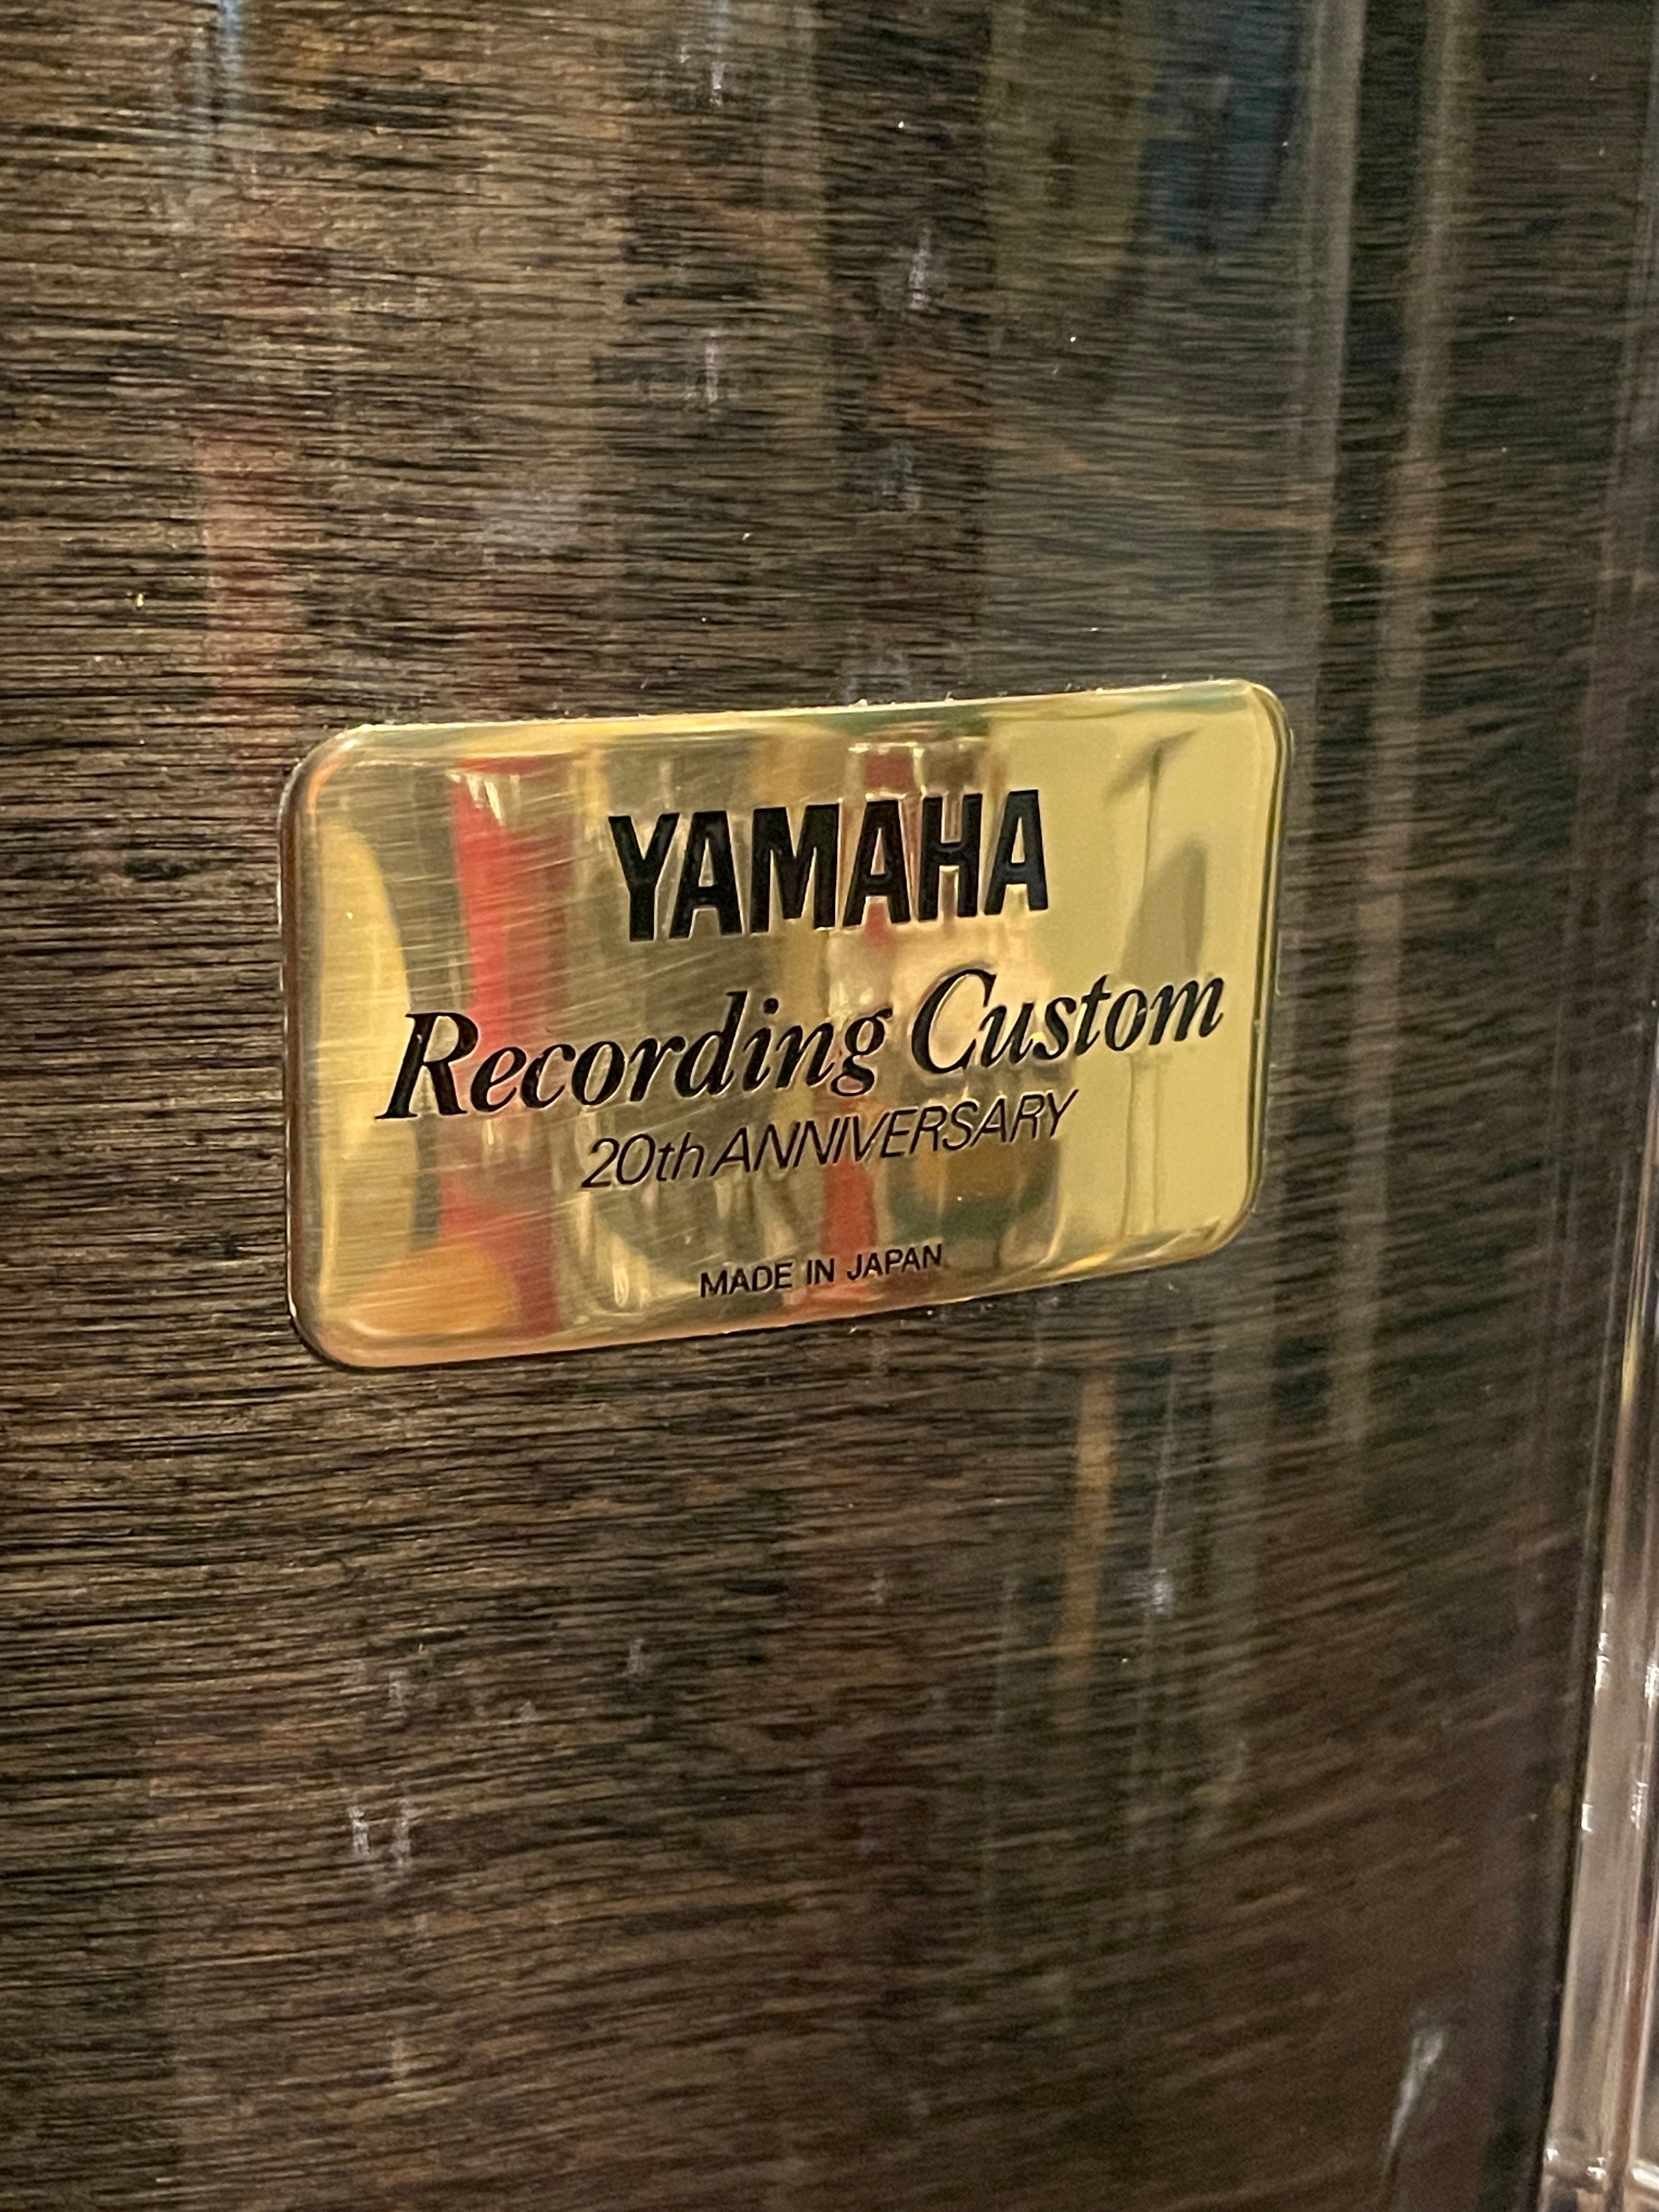 1996 Yamaha 20th Anniversary Recording Custom 14x16 Floor Tom Drum